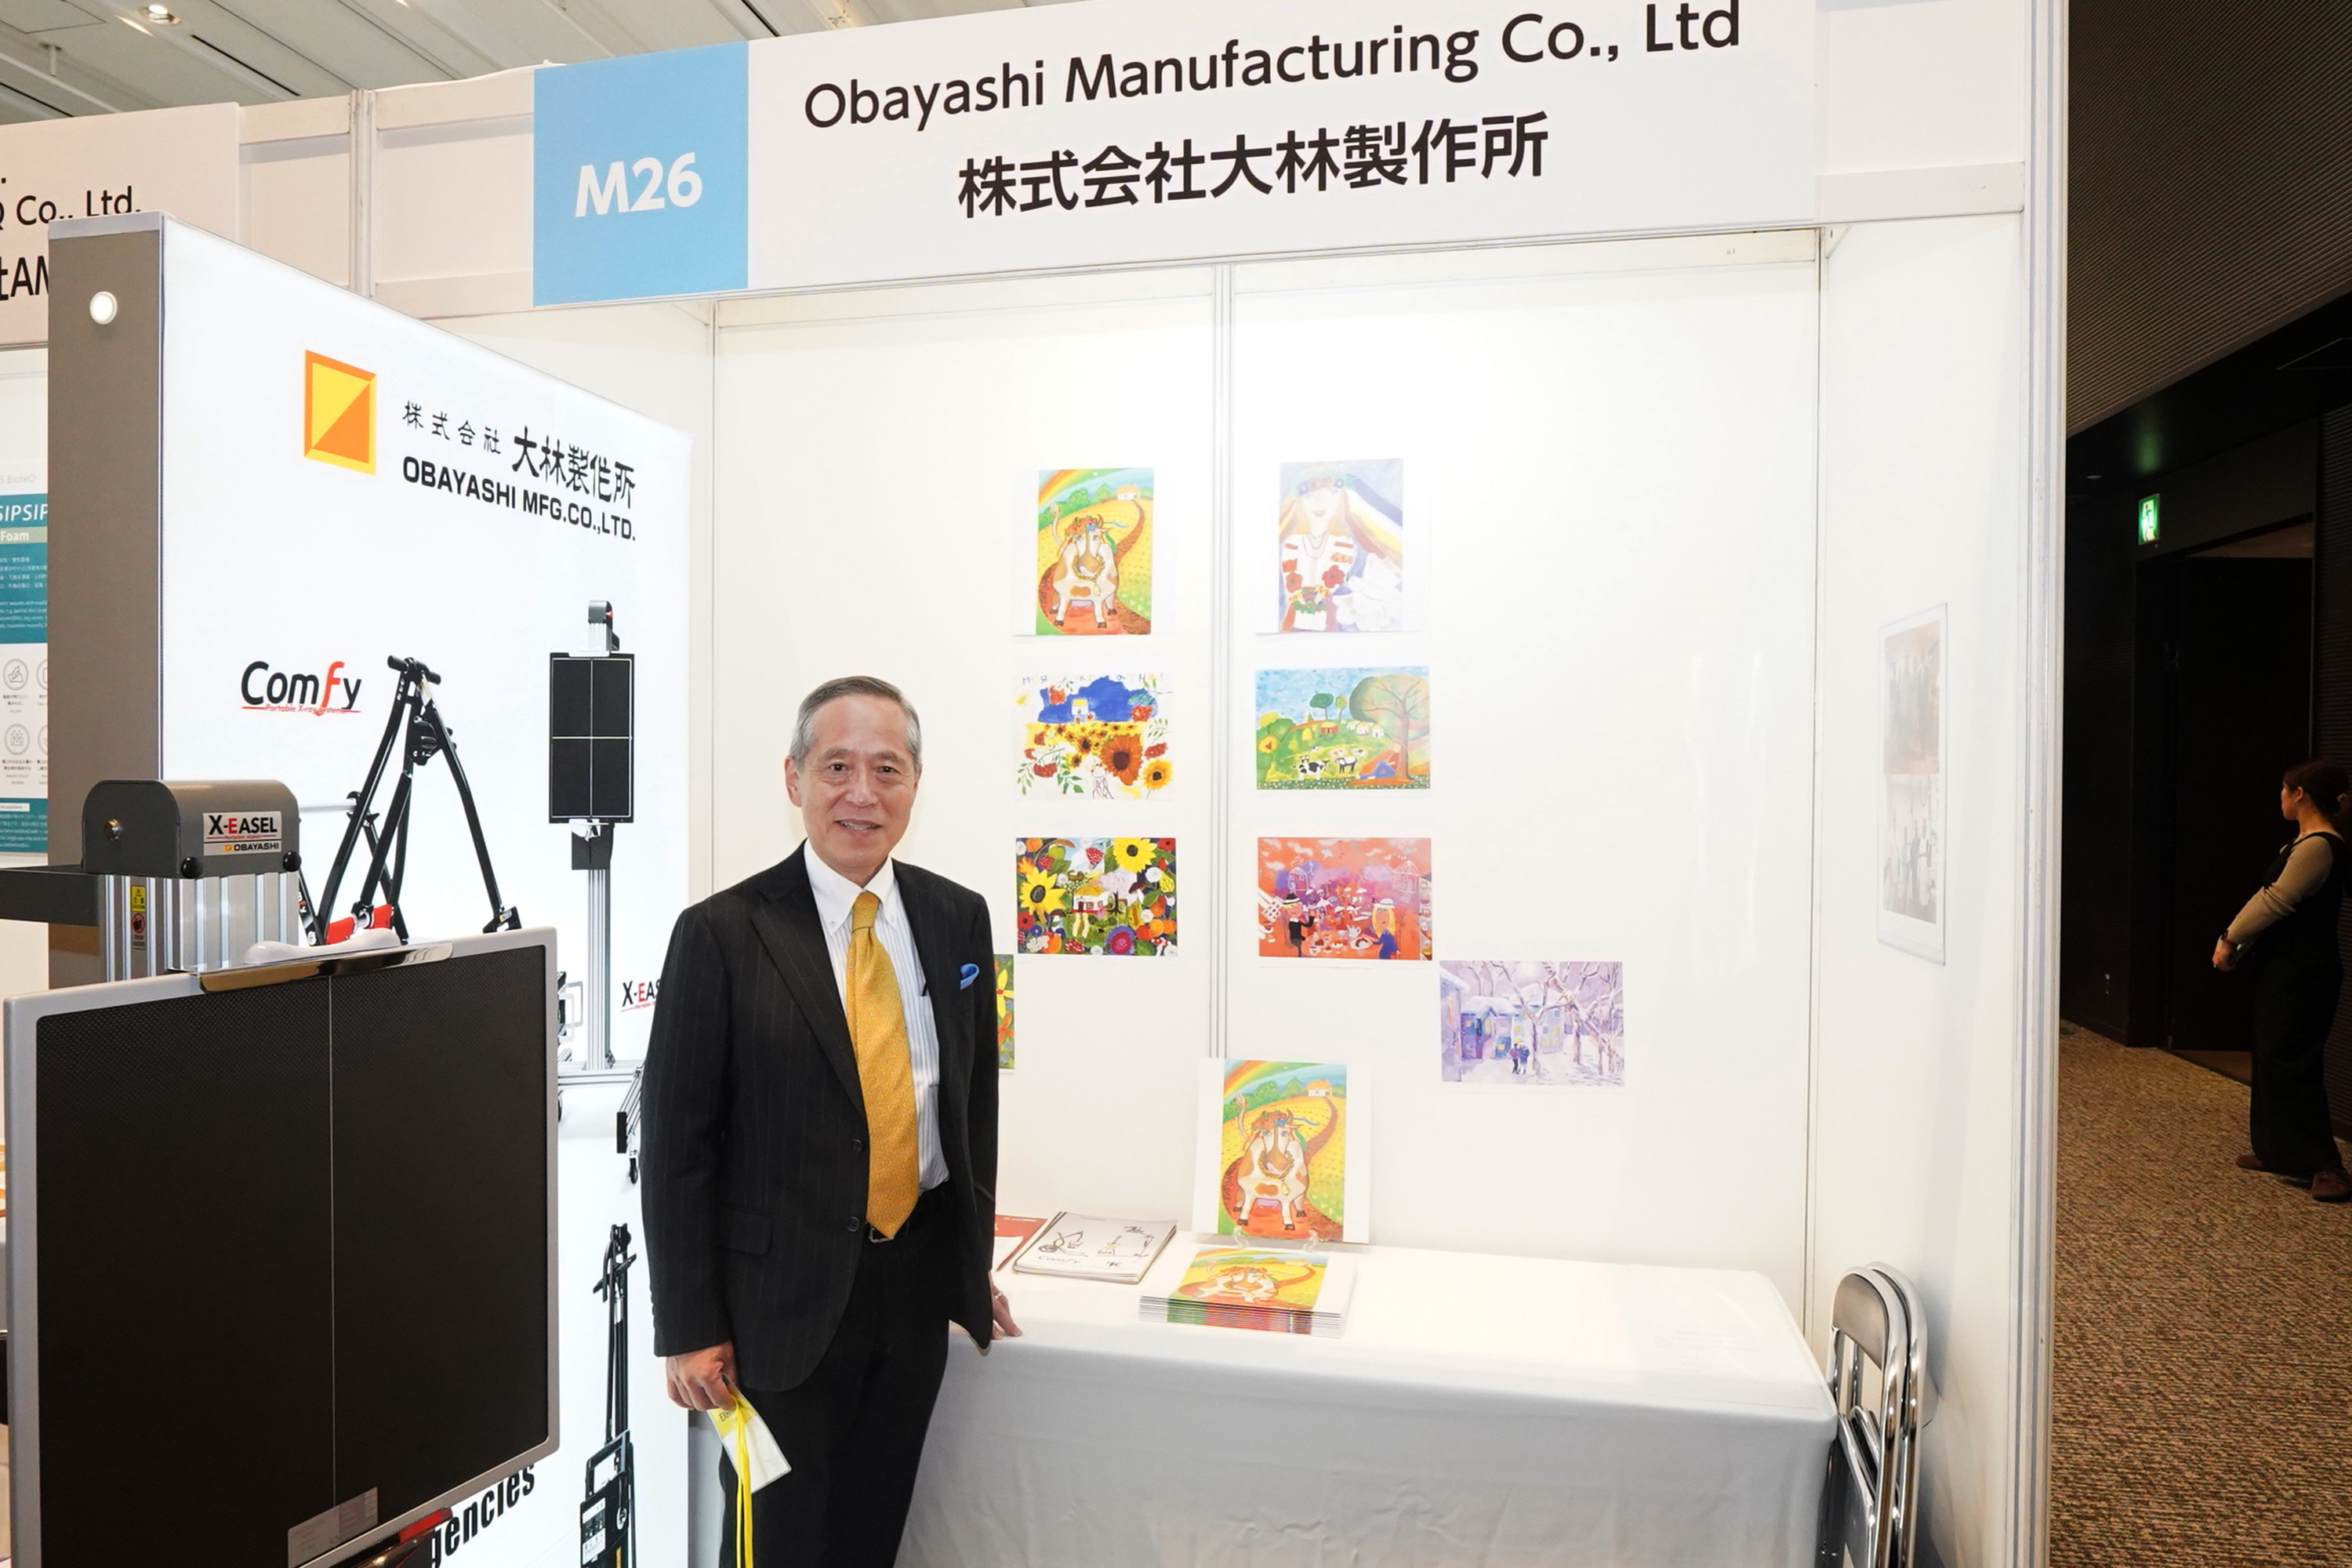 Obayashi Manufacturing Co., Ltd.